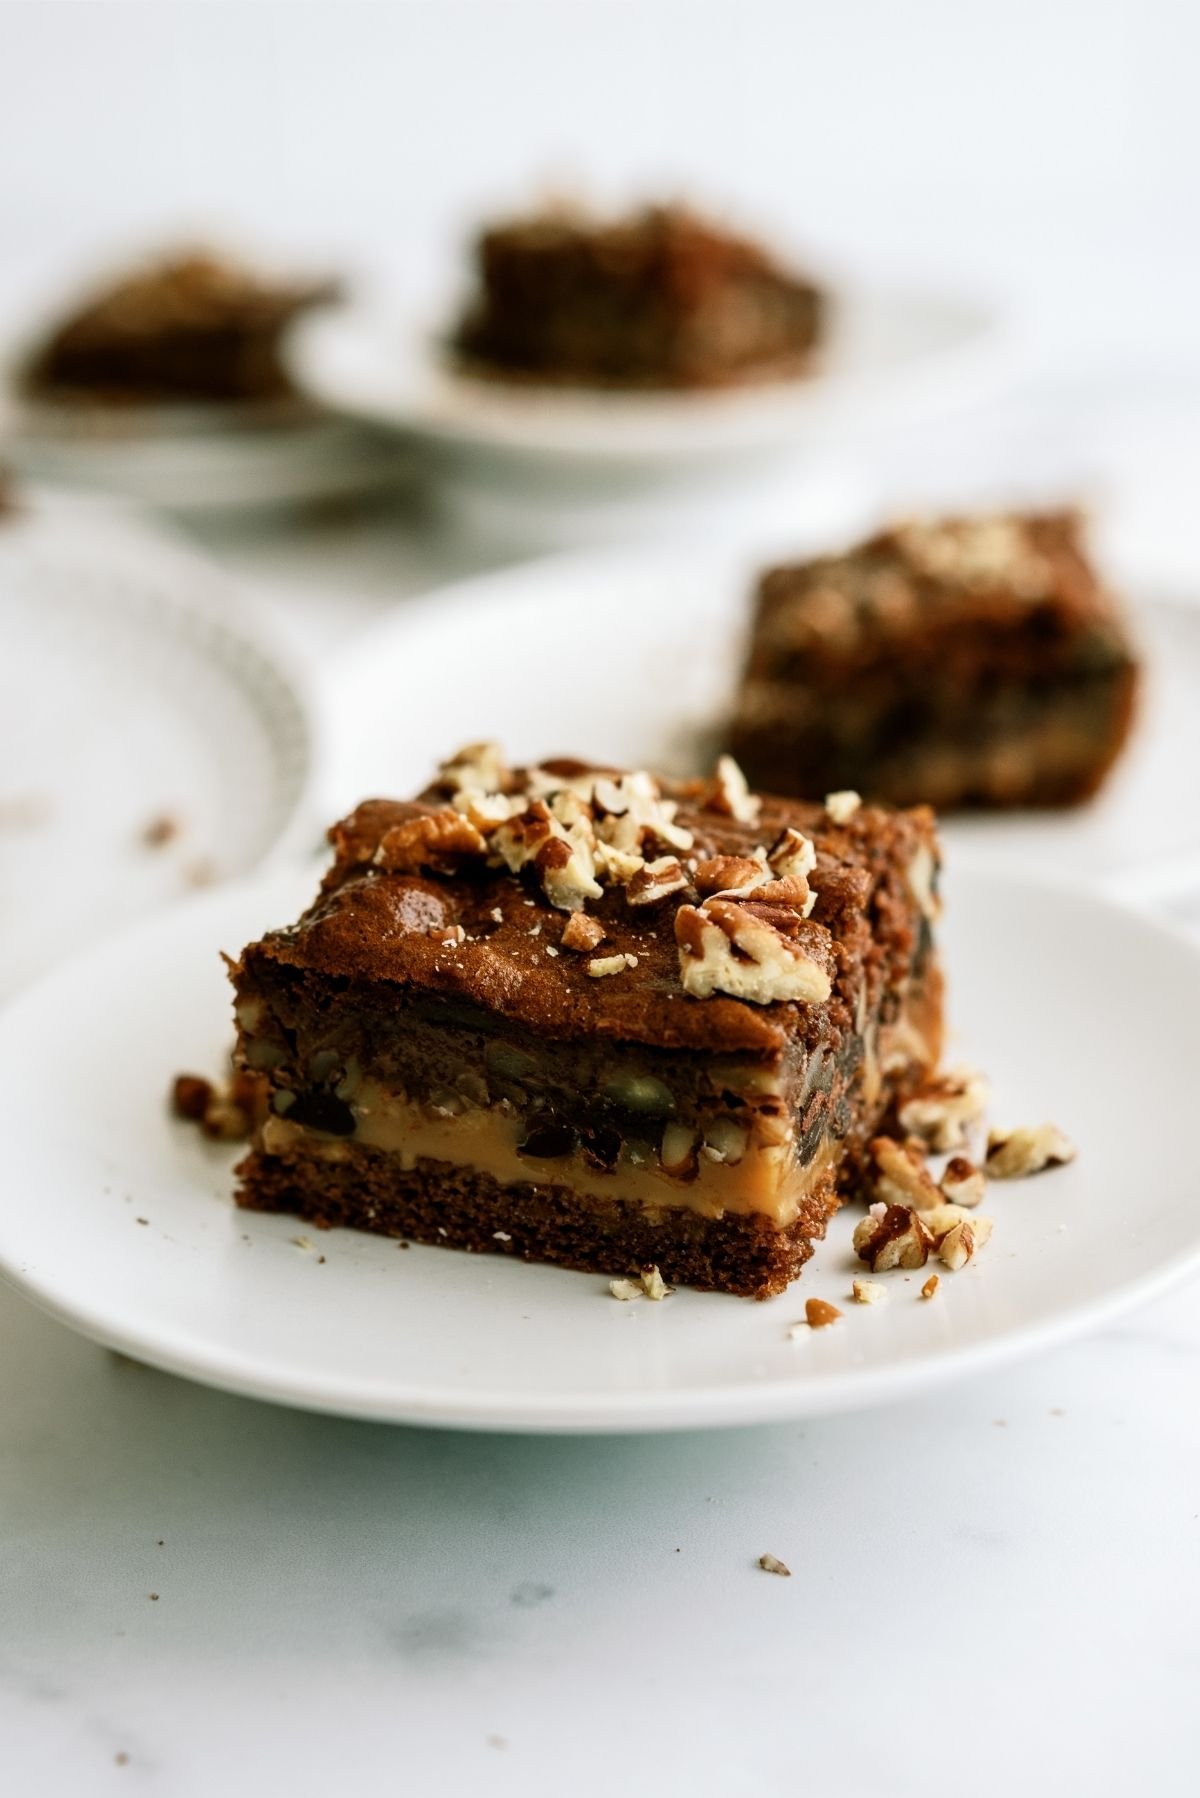 Snickers Cake (Gooey Caramel Chocolate Cake) Recipe